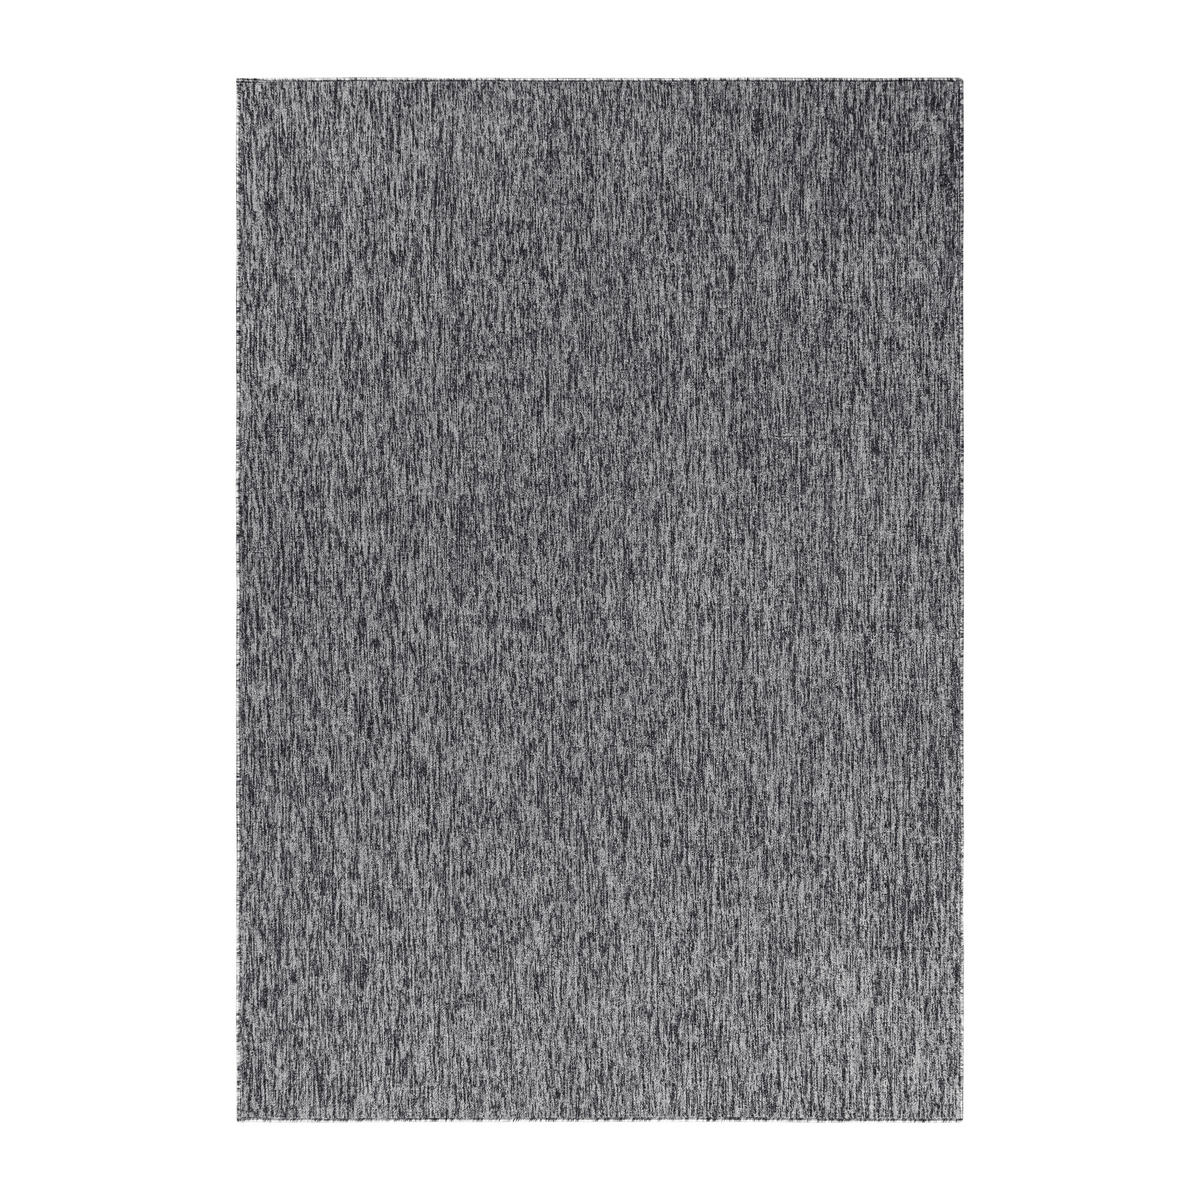 FLACHWEBETEPPICH 240/340 cm Nizza 1800 Grau  - Grau, KONVENTIONELL, Textil (240/340cm) - Novel